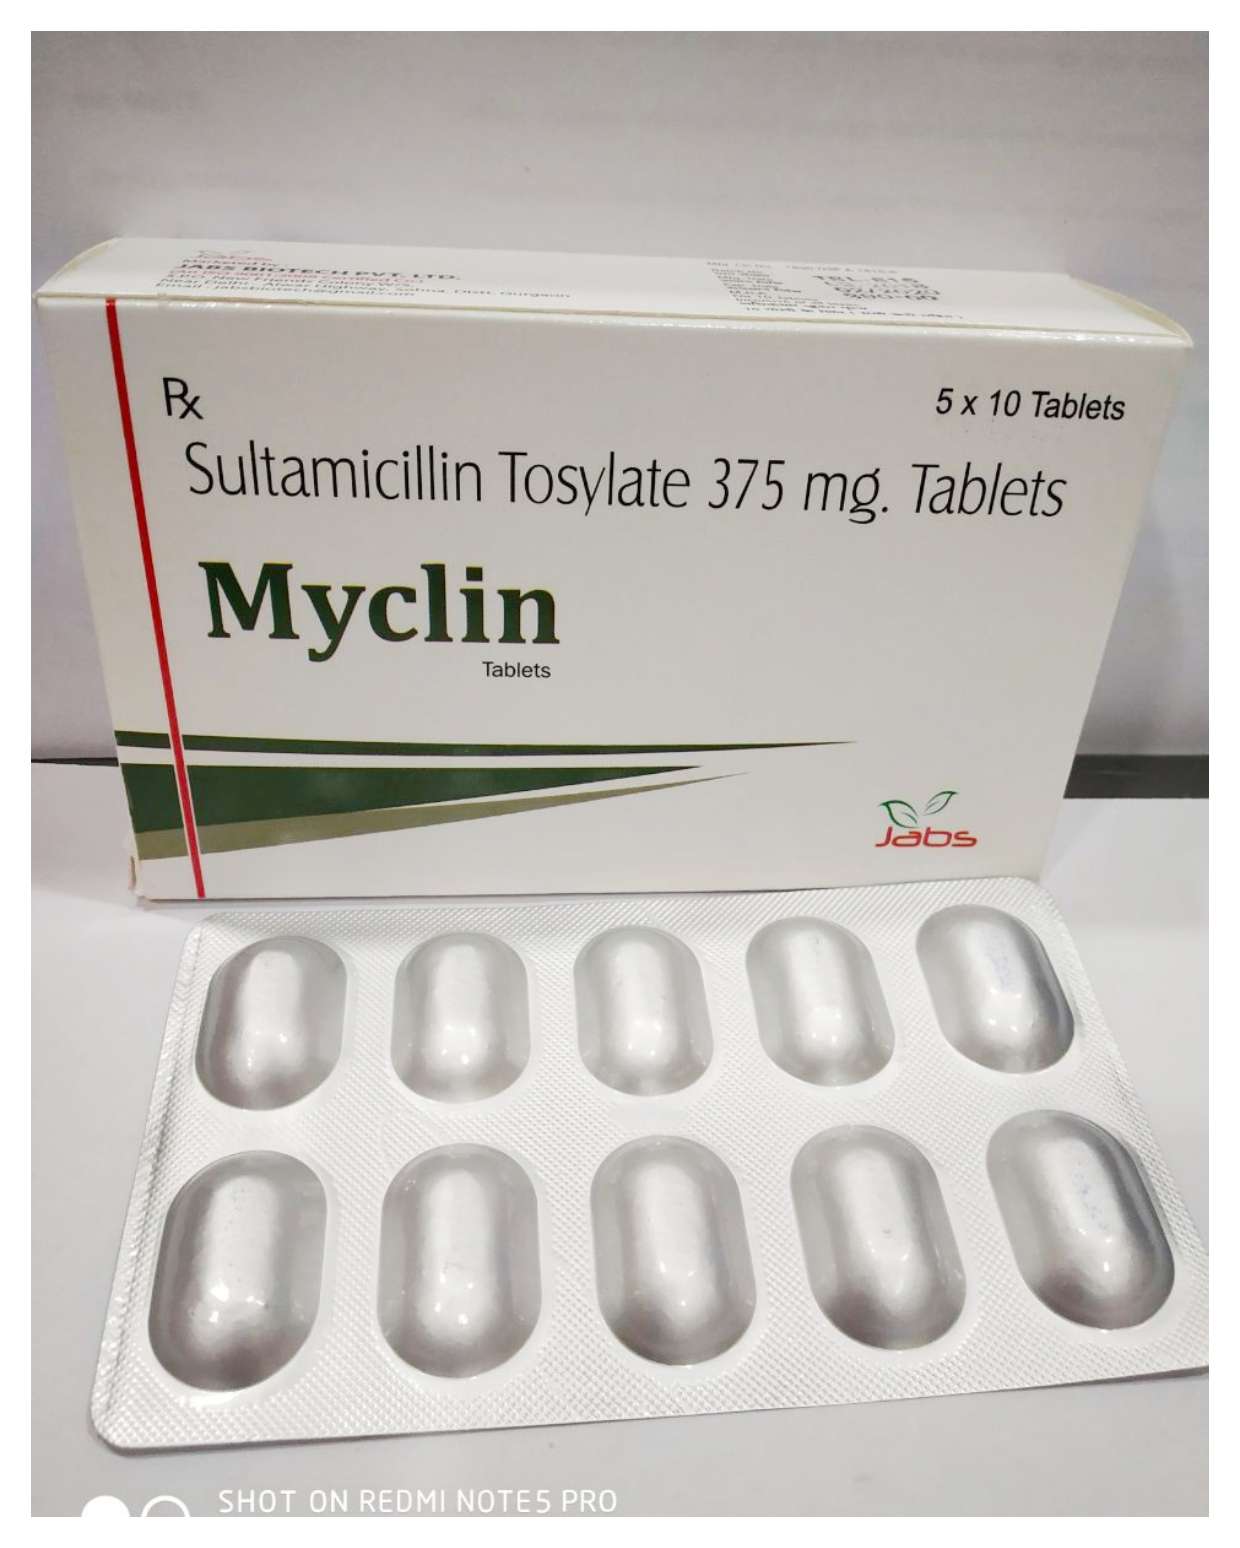 sultamicillin tosylate-375mg.